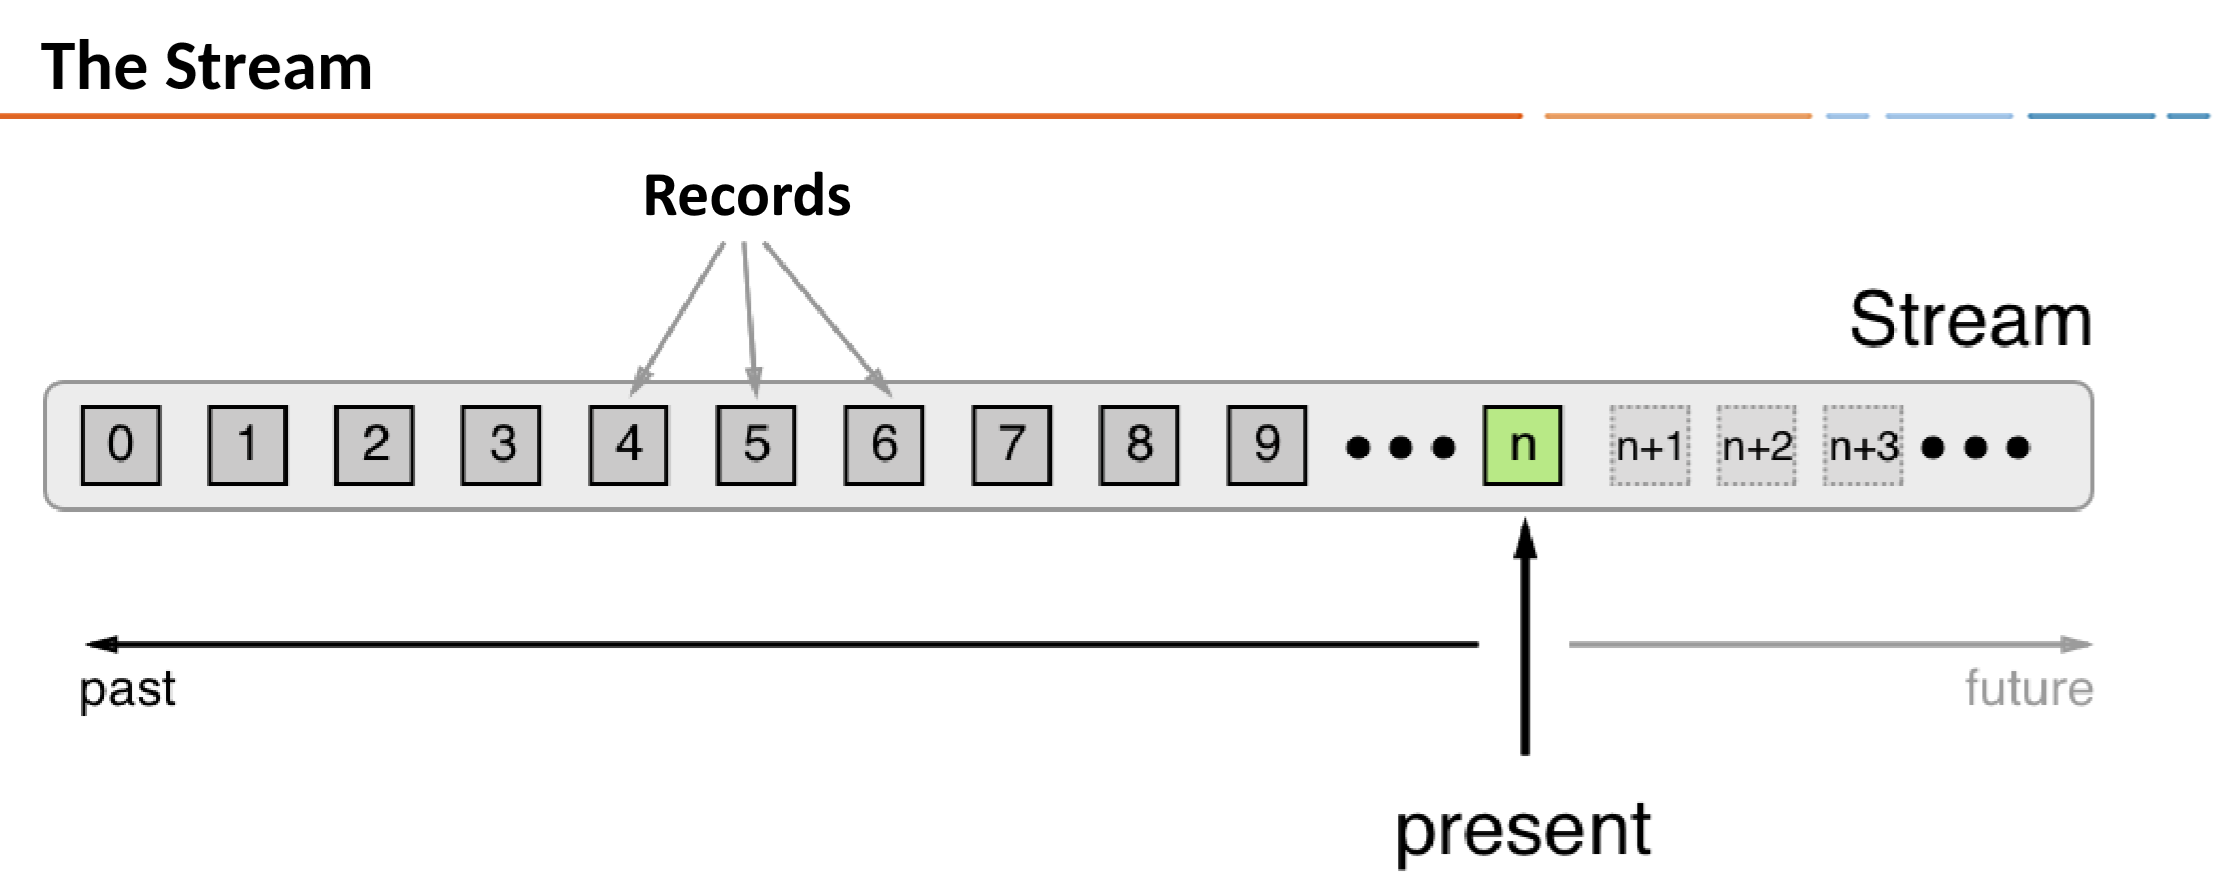 Diagram showing records in a KSQL stream